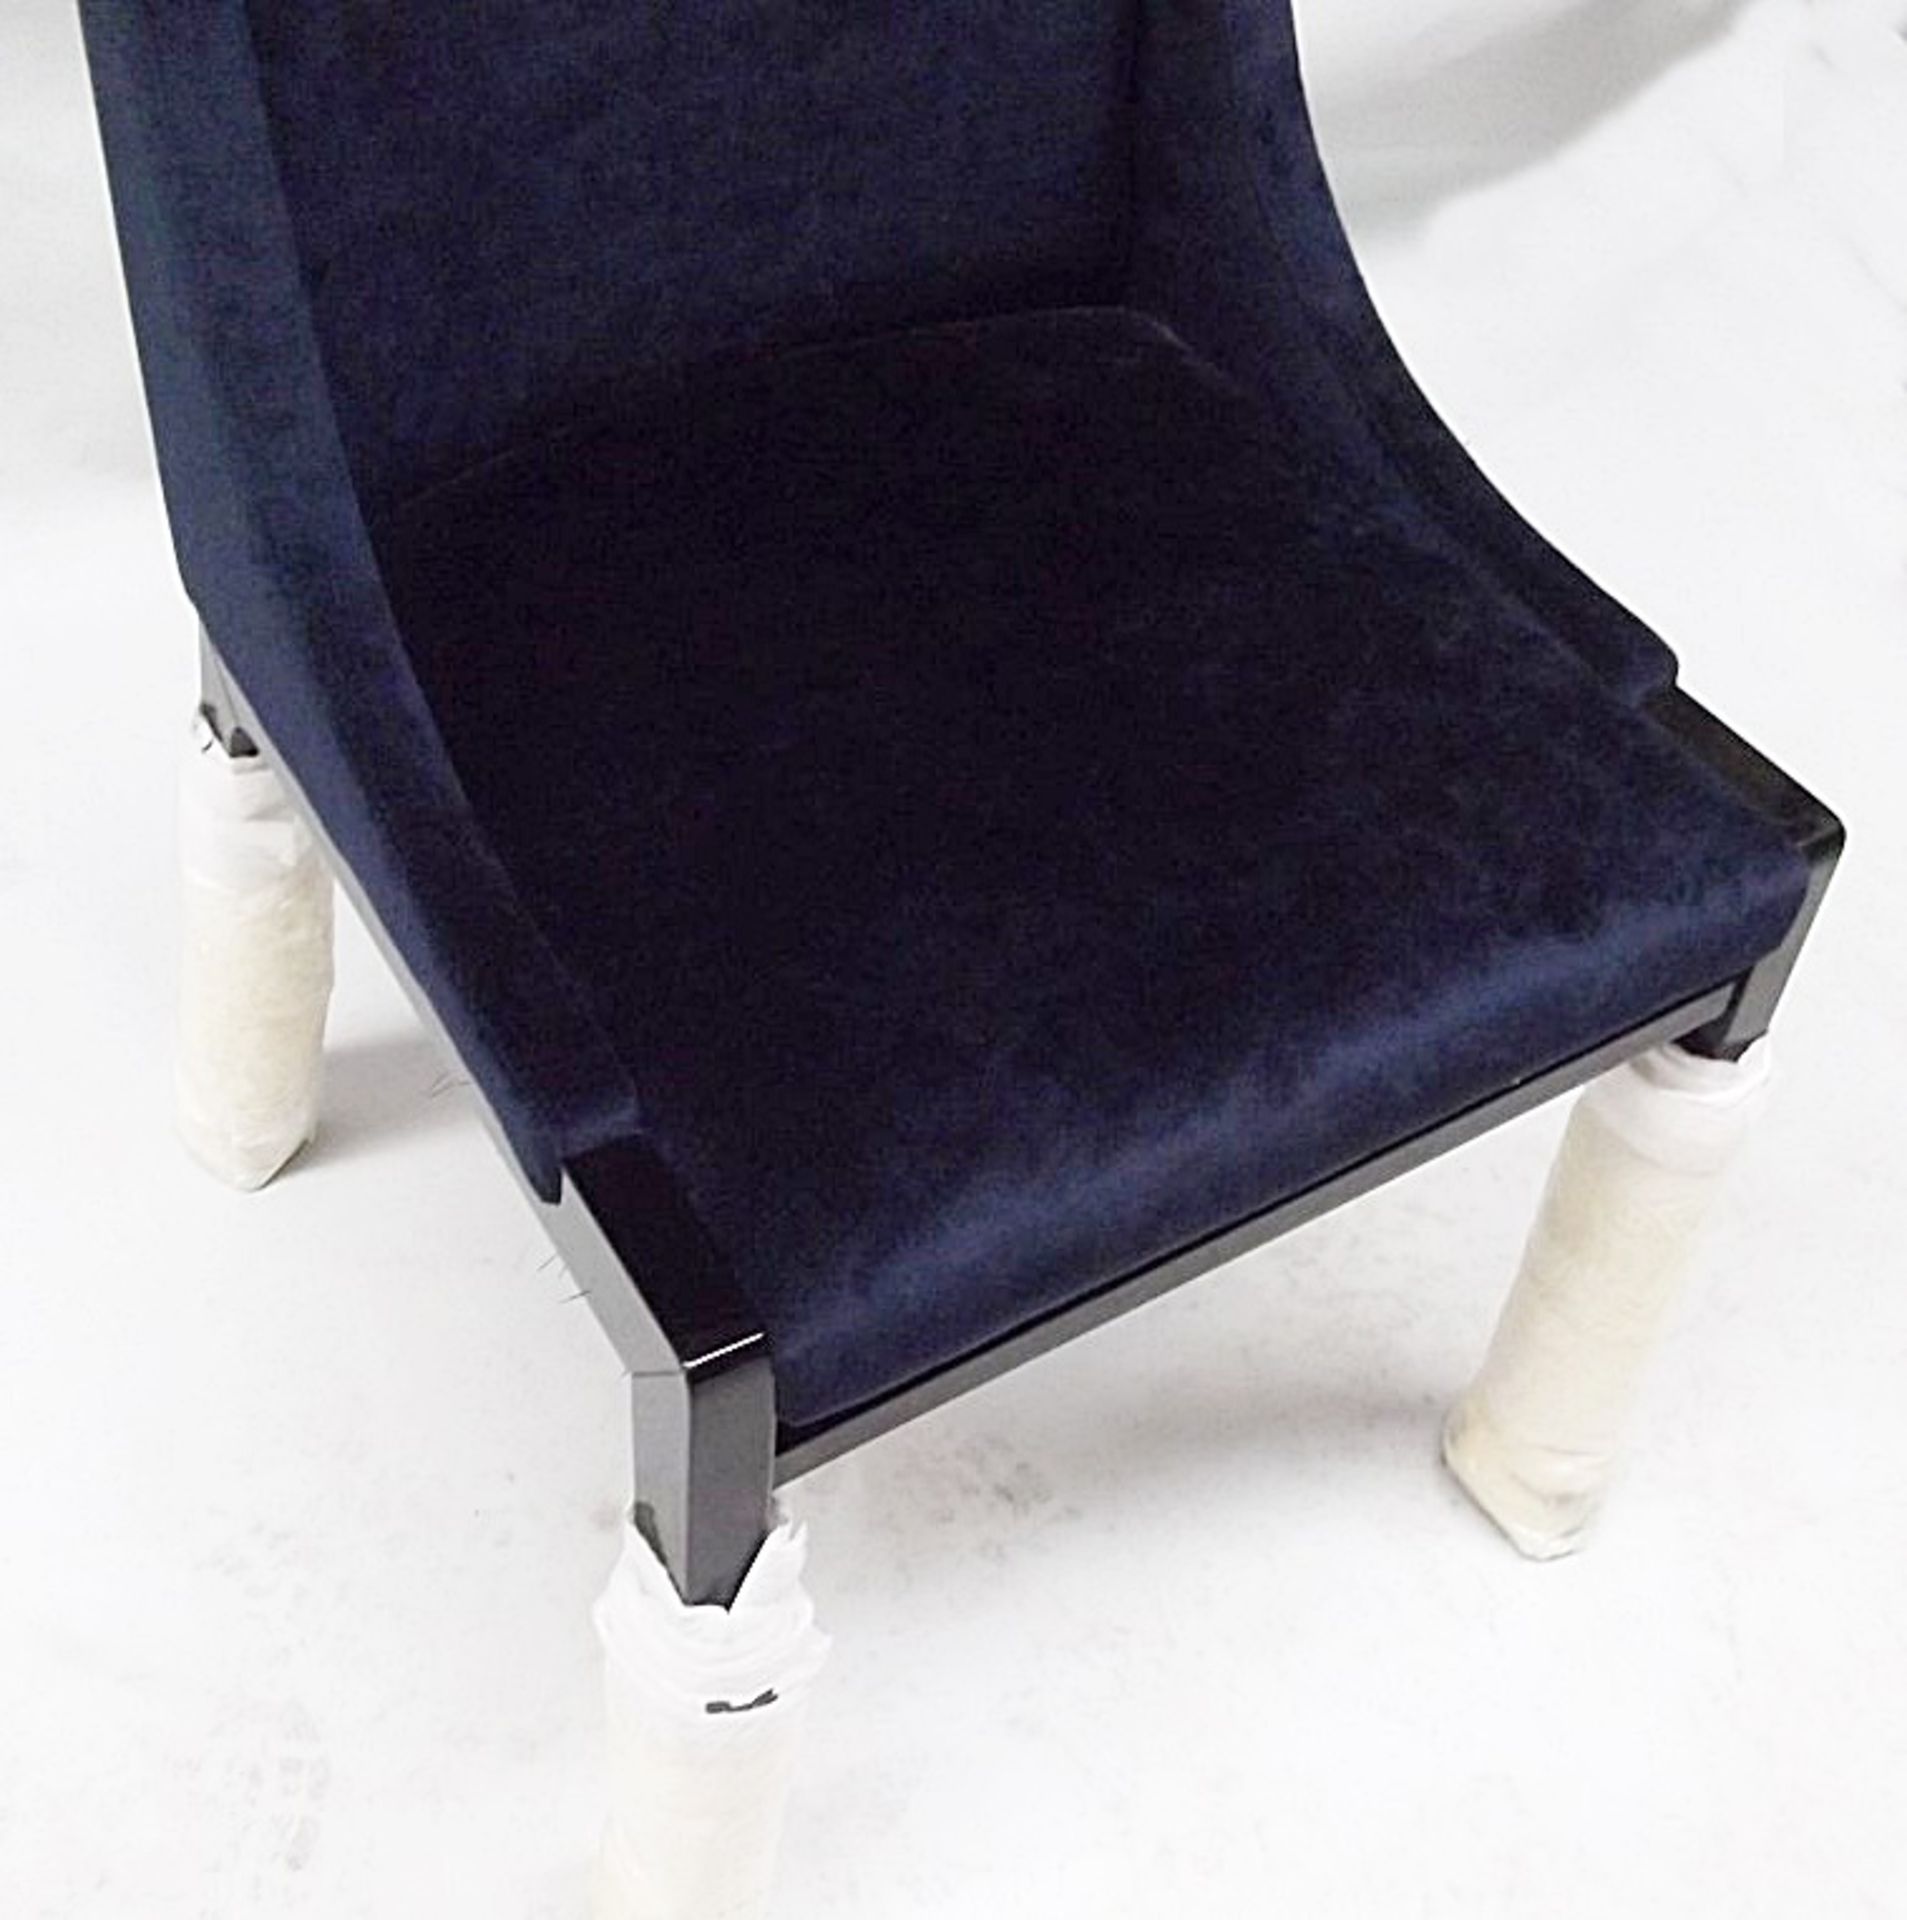 1 x KESTERPORT LTD 9235s Sempre High Back Side Chair - 137 x 53 x 53cm - Ref: 4416848 - CL087 - - Image 4 of 9